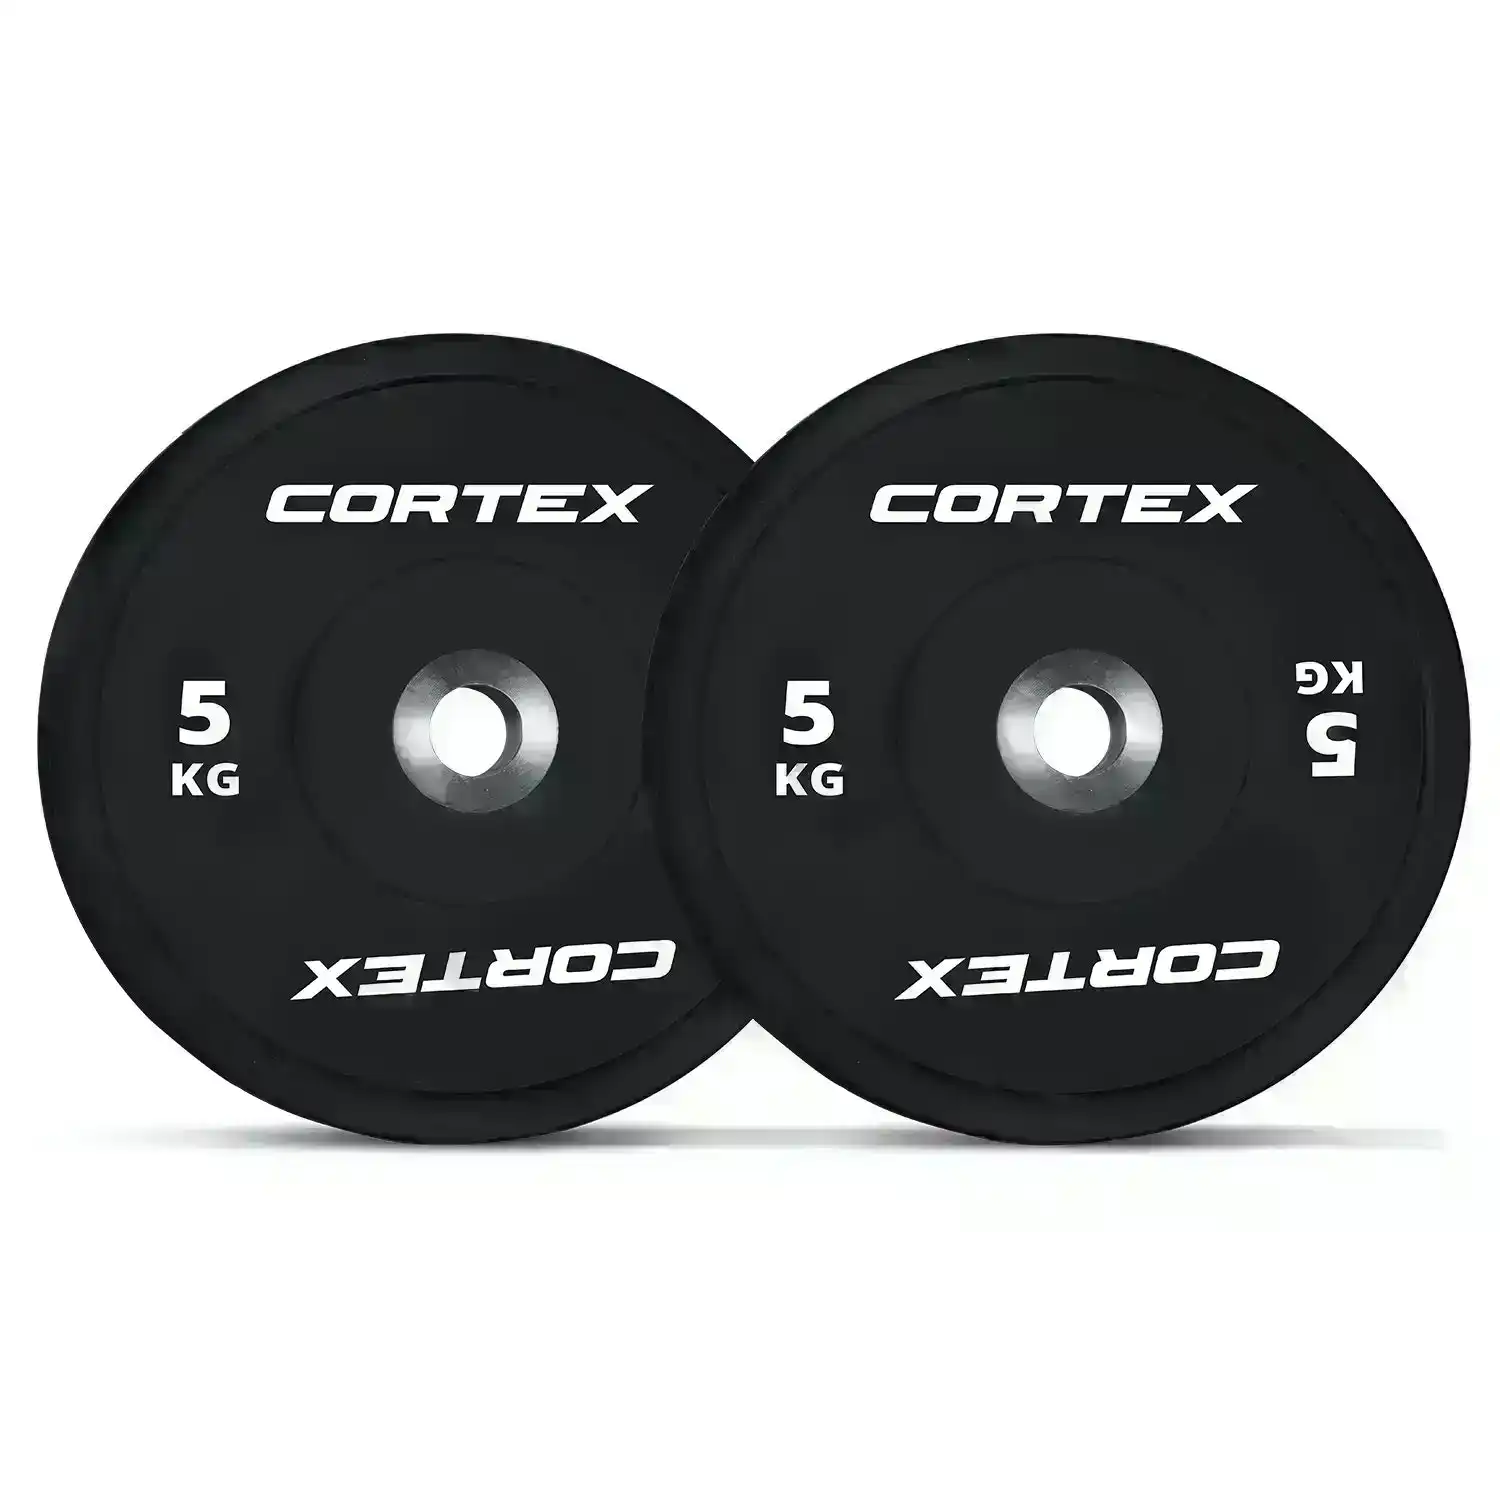 Cortex 5kg Competition Bumper Plates (Pair)